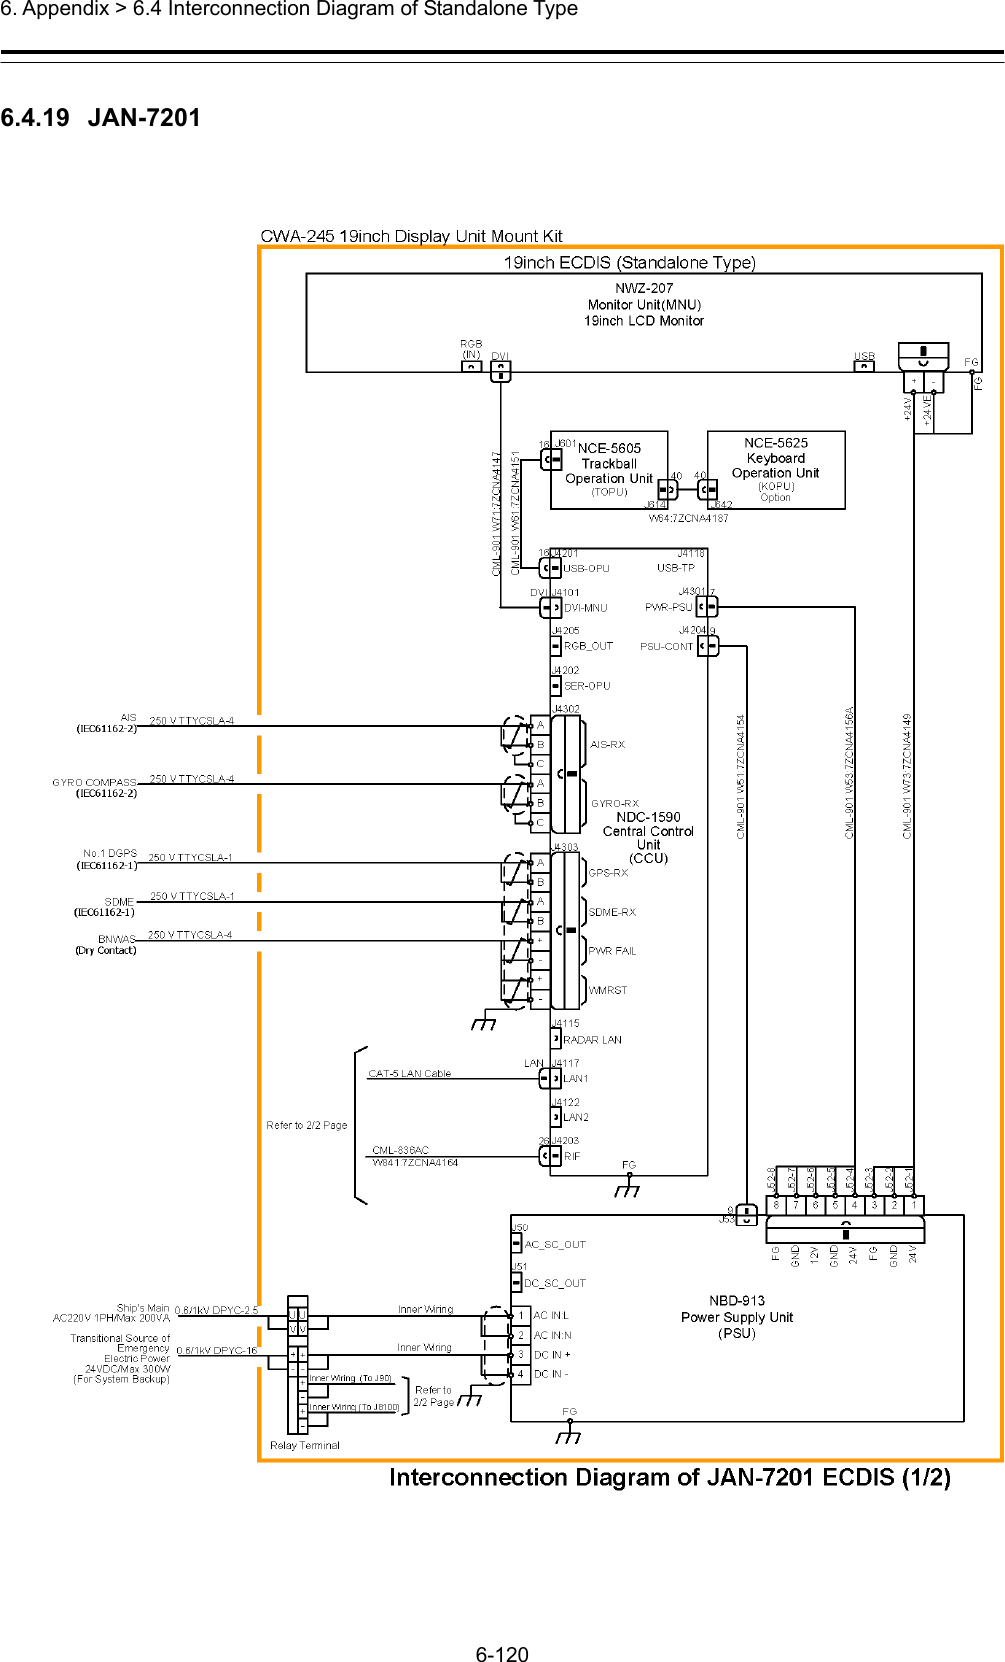  6. Appendix &gt; 6.4 Interconnection Diagram of Standalone Type 6-120  6.4.19  JAN-7201  